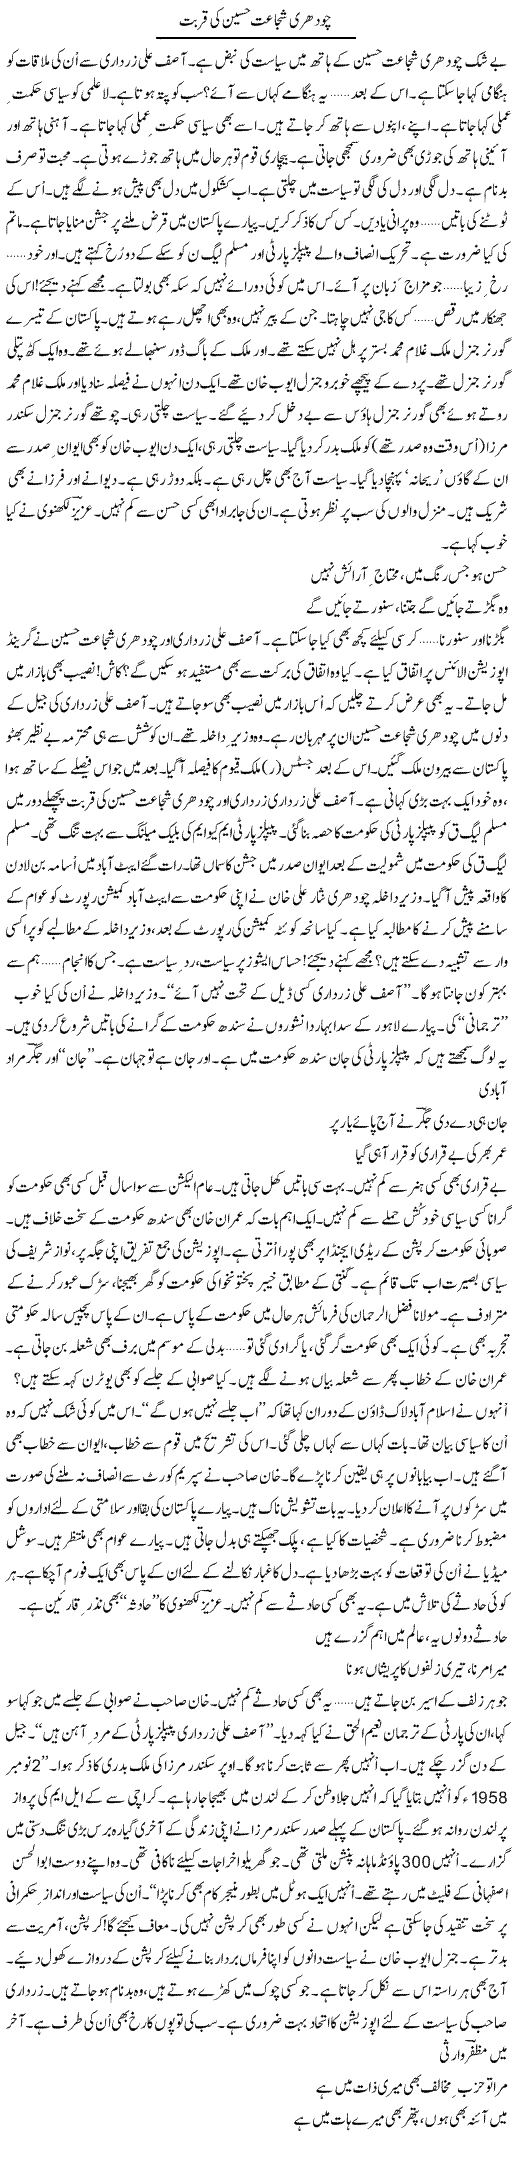 Chaudhry Shujaat Hussain Ki Qurbat | Ejaz Hafeez Khan | Daily Urdu Columns